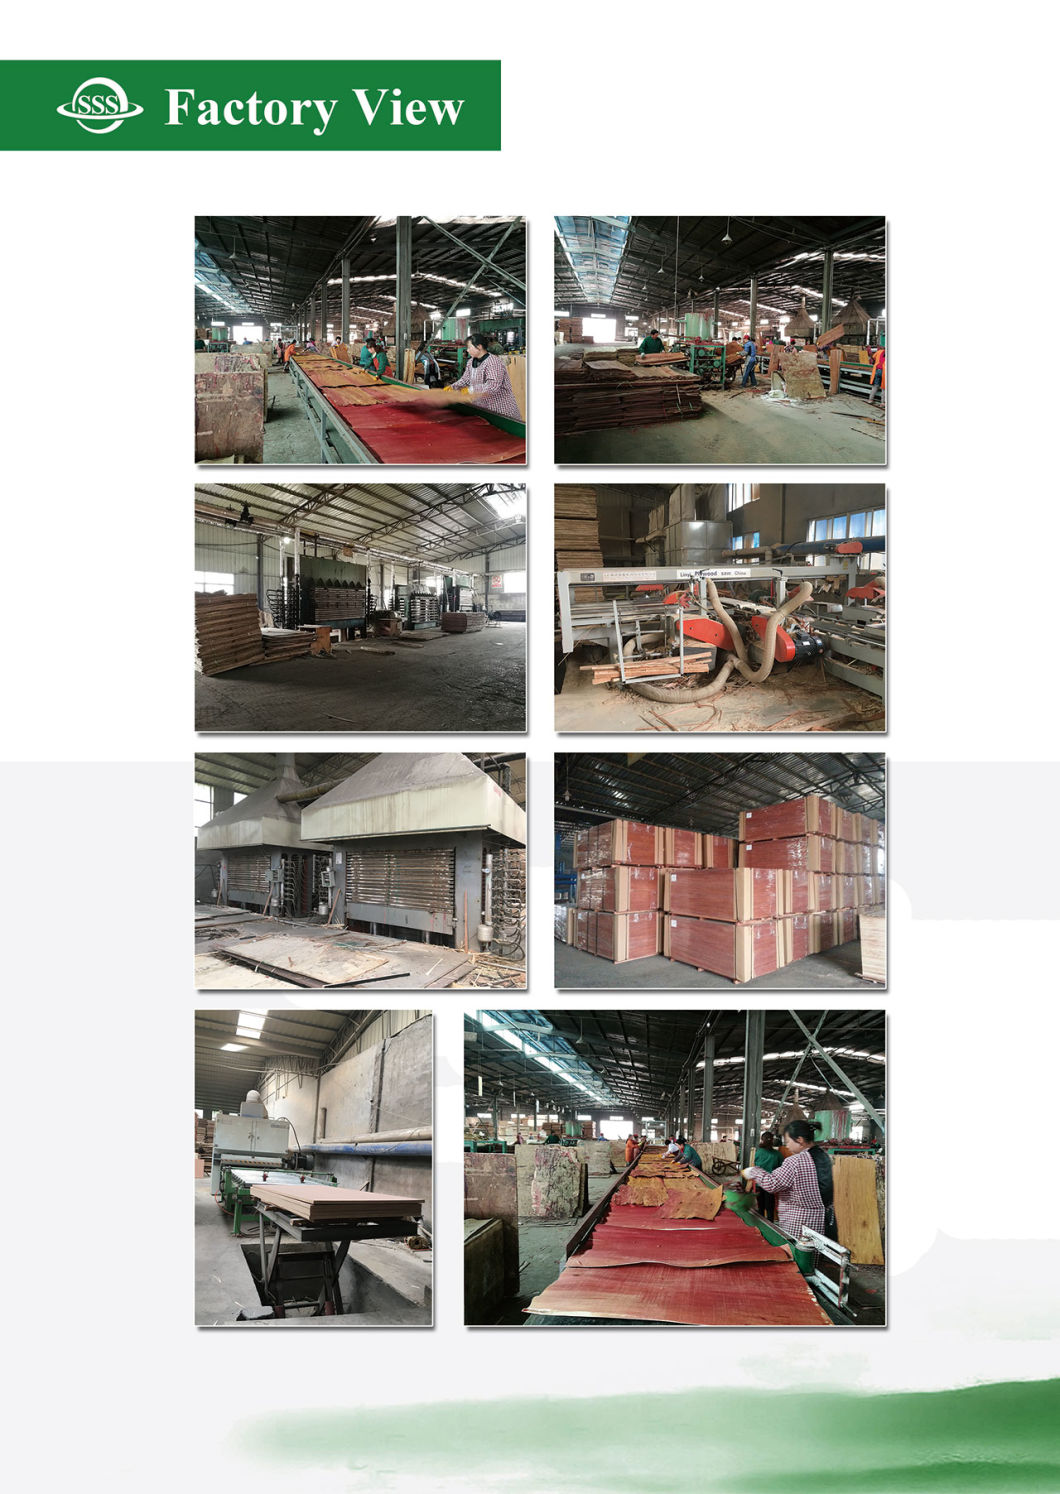 Cimc WBP Marine 28mm Container Flooring Plywood for Container Repairing Container Parts